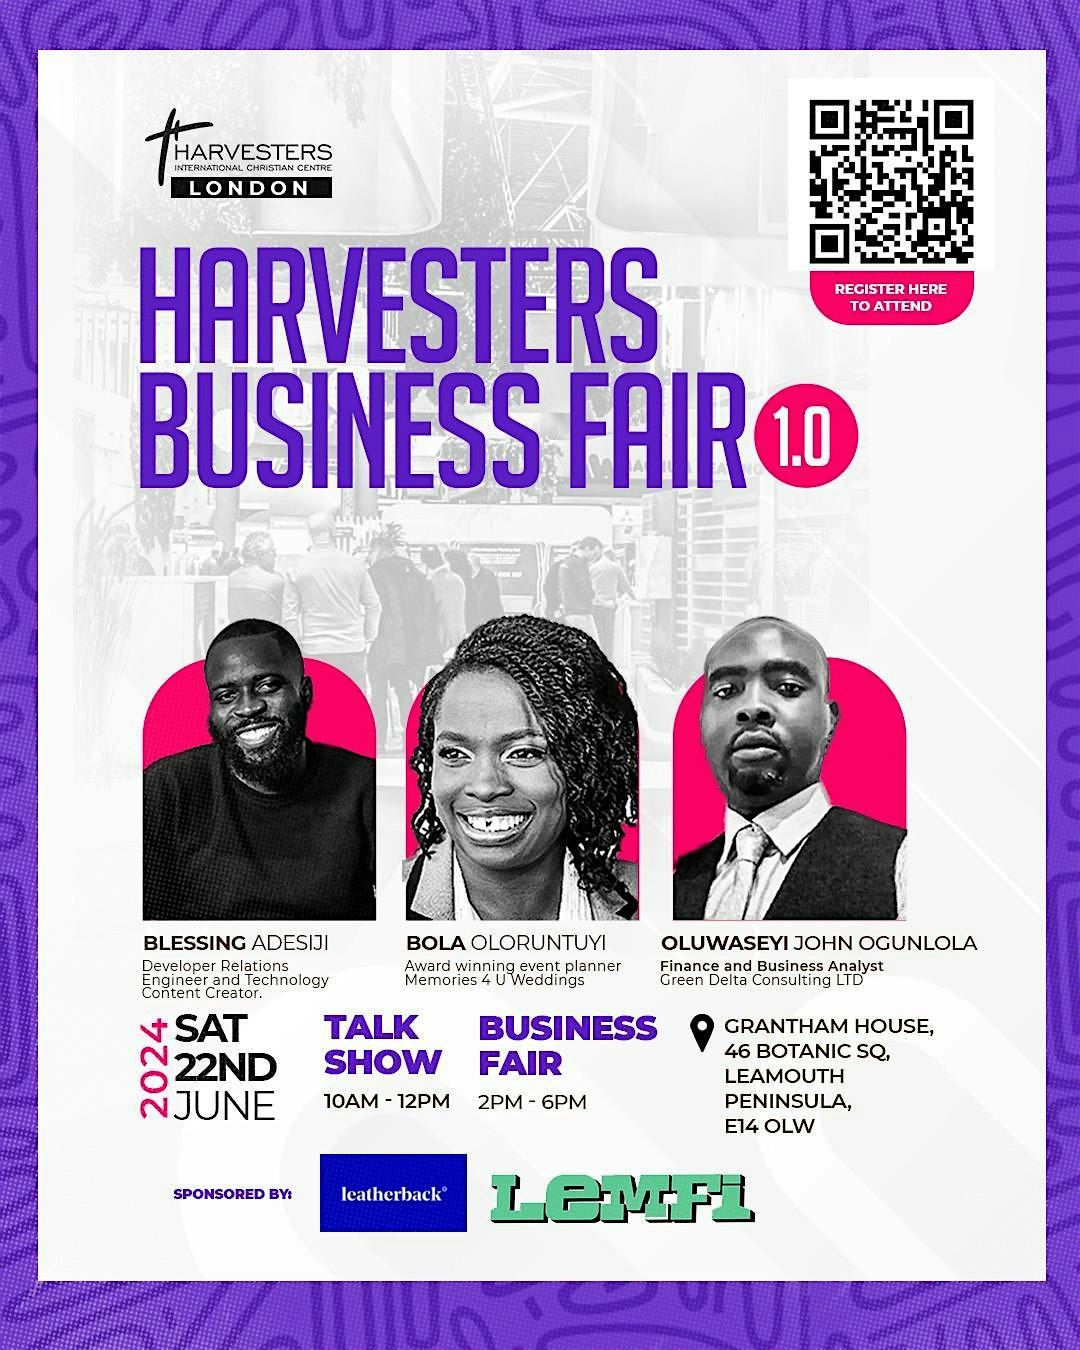 Harvesters Business fair 1.0